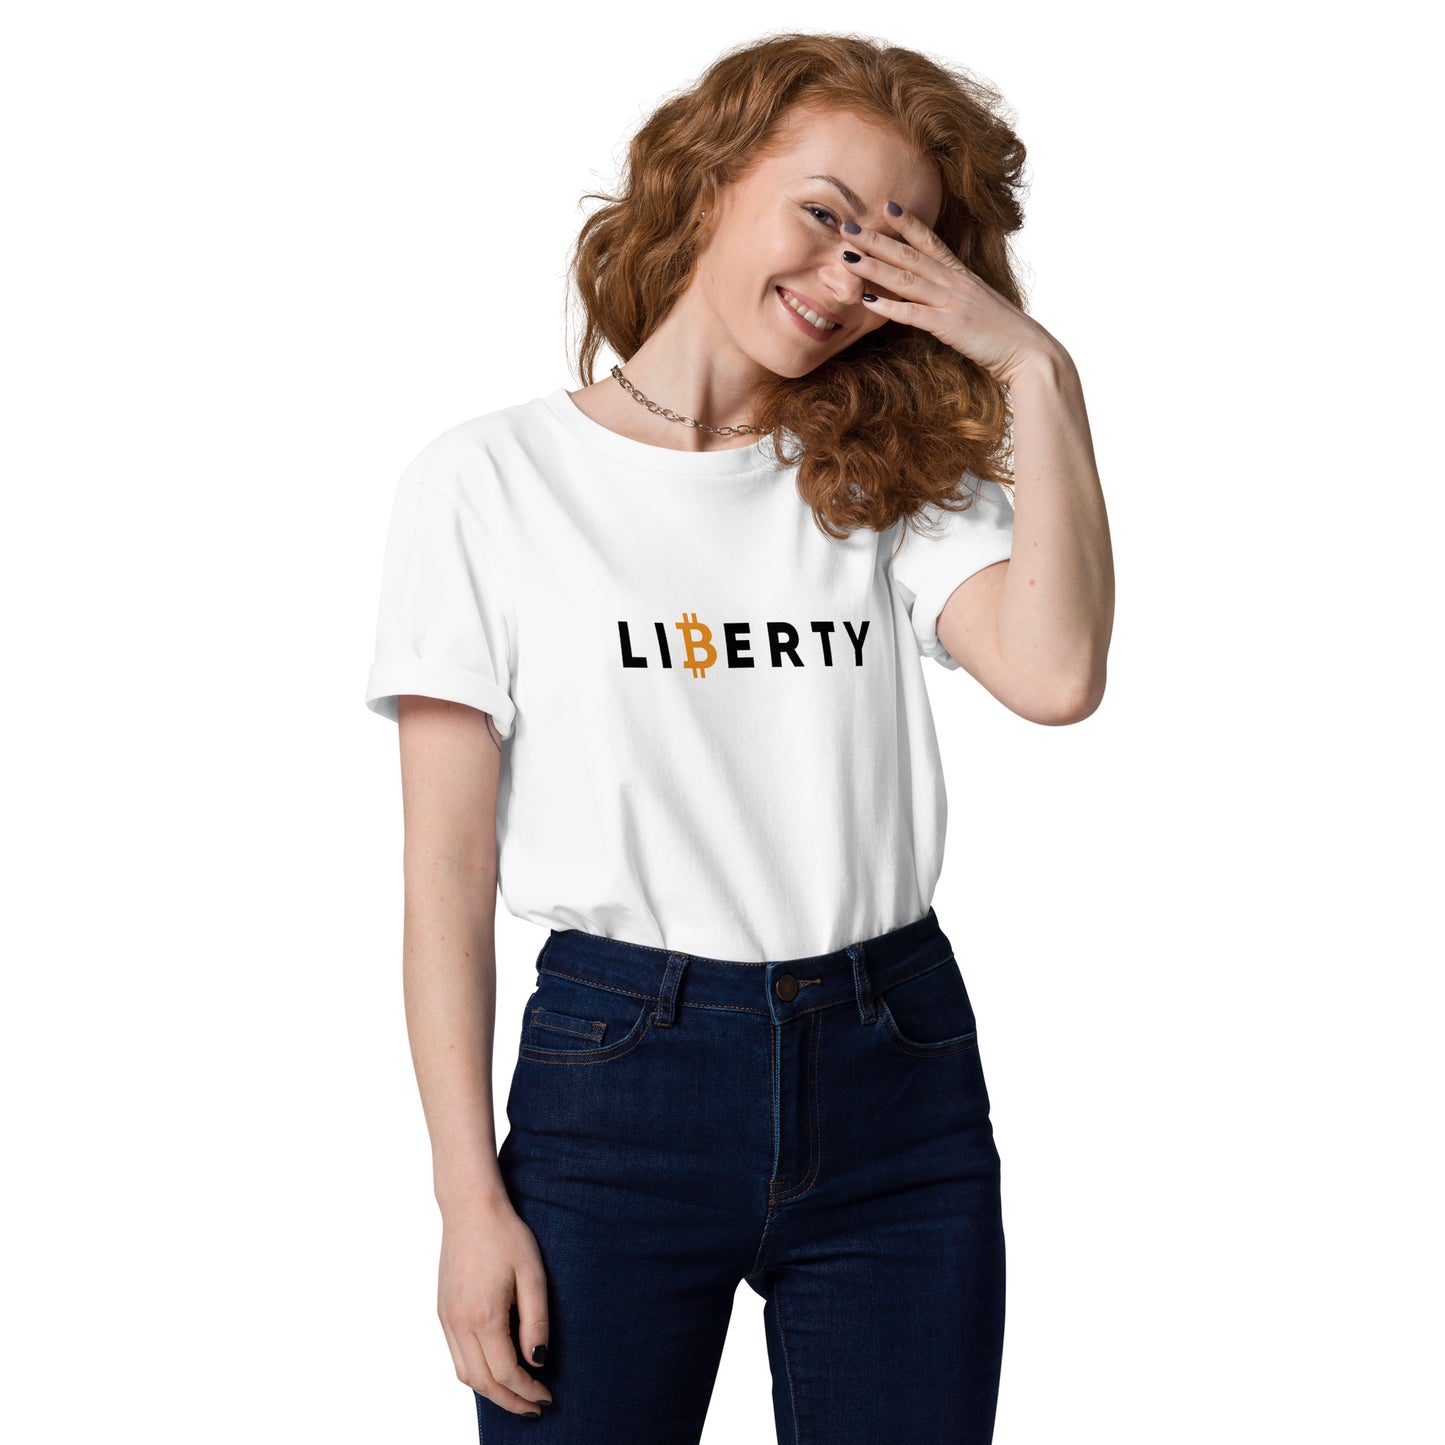 Liberty organic cotton t-shirt